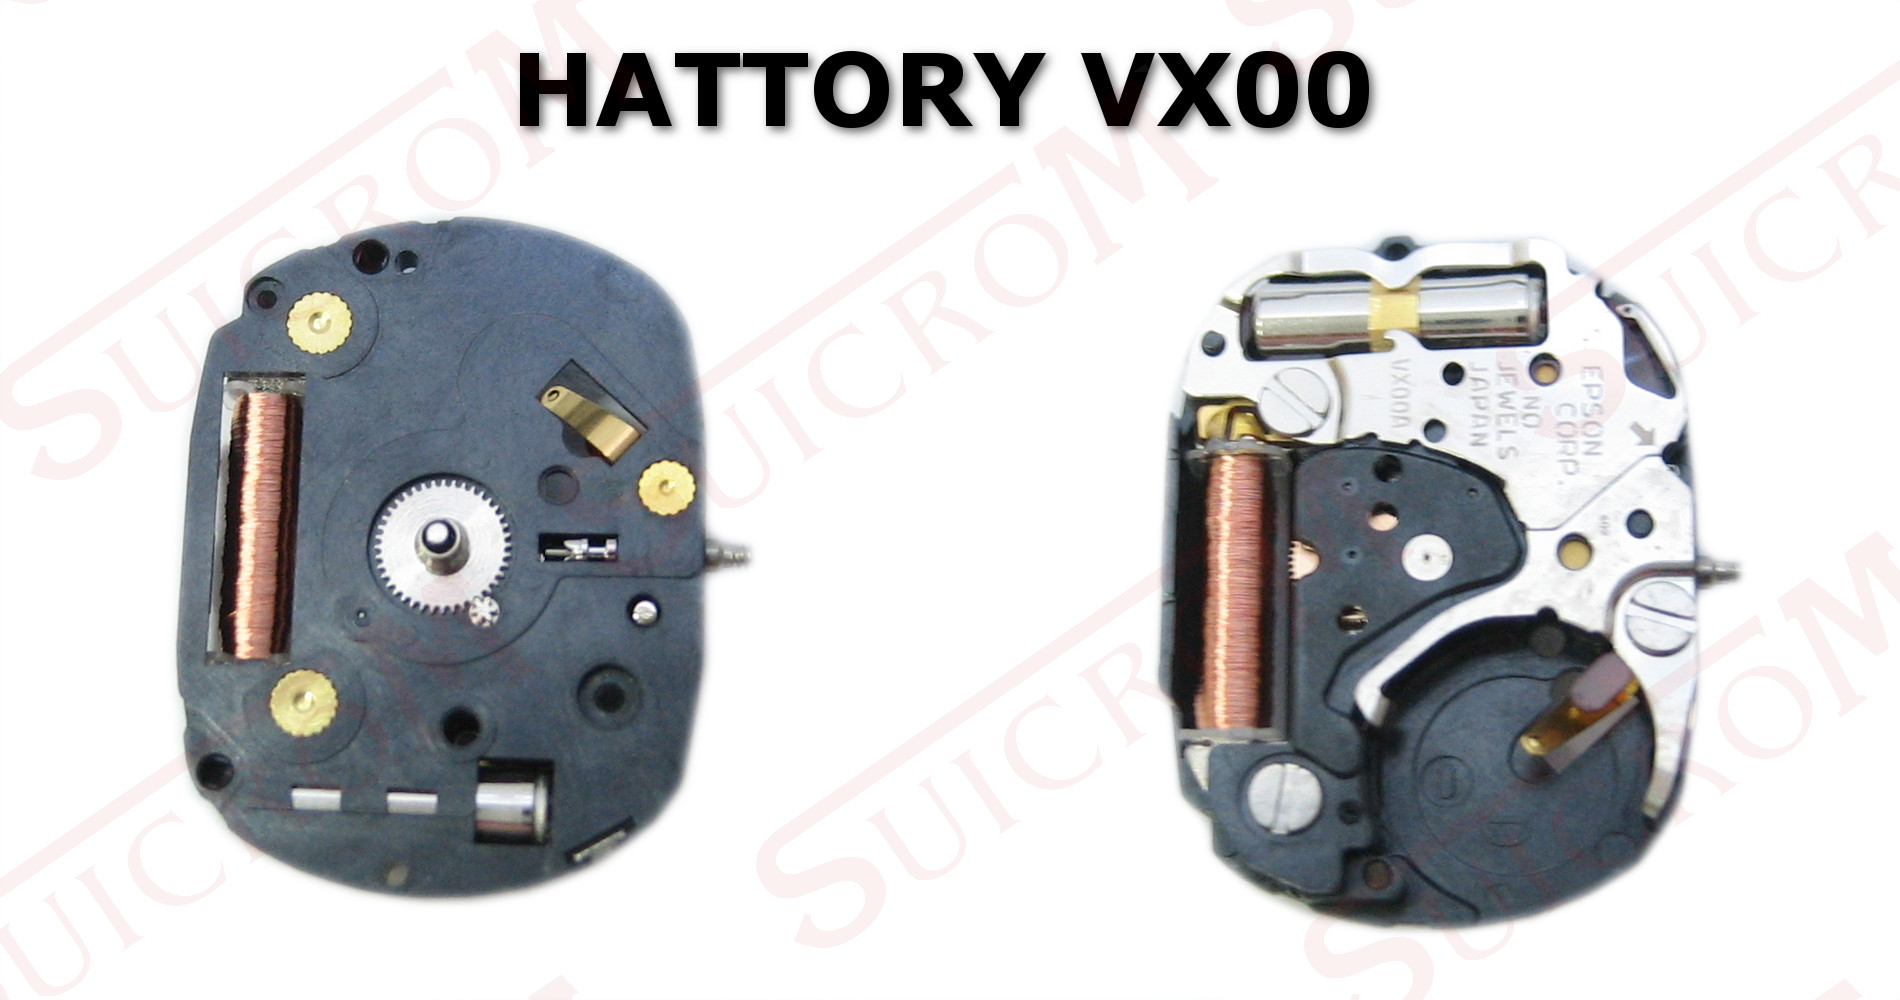 Movimiento Hattory Vx00